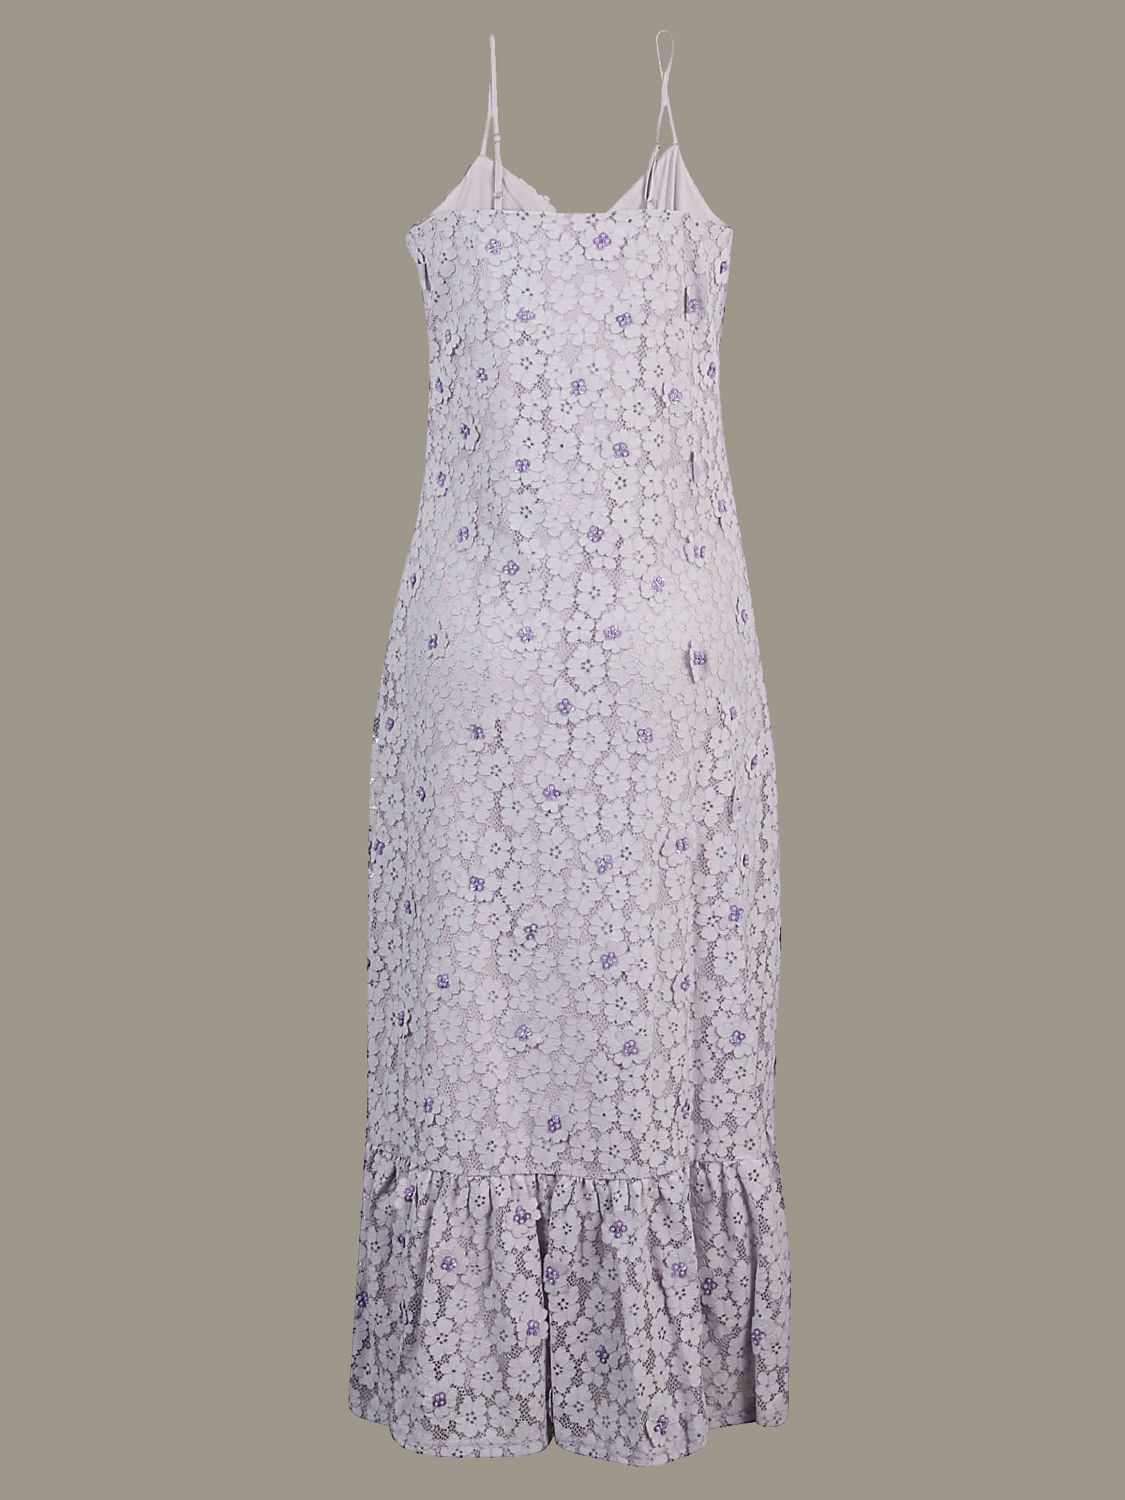 michael kors lavender dress